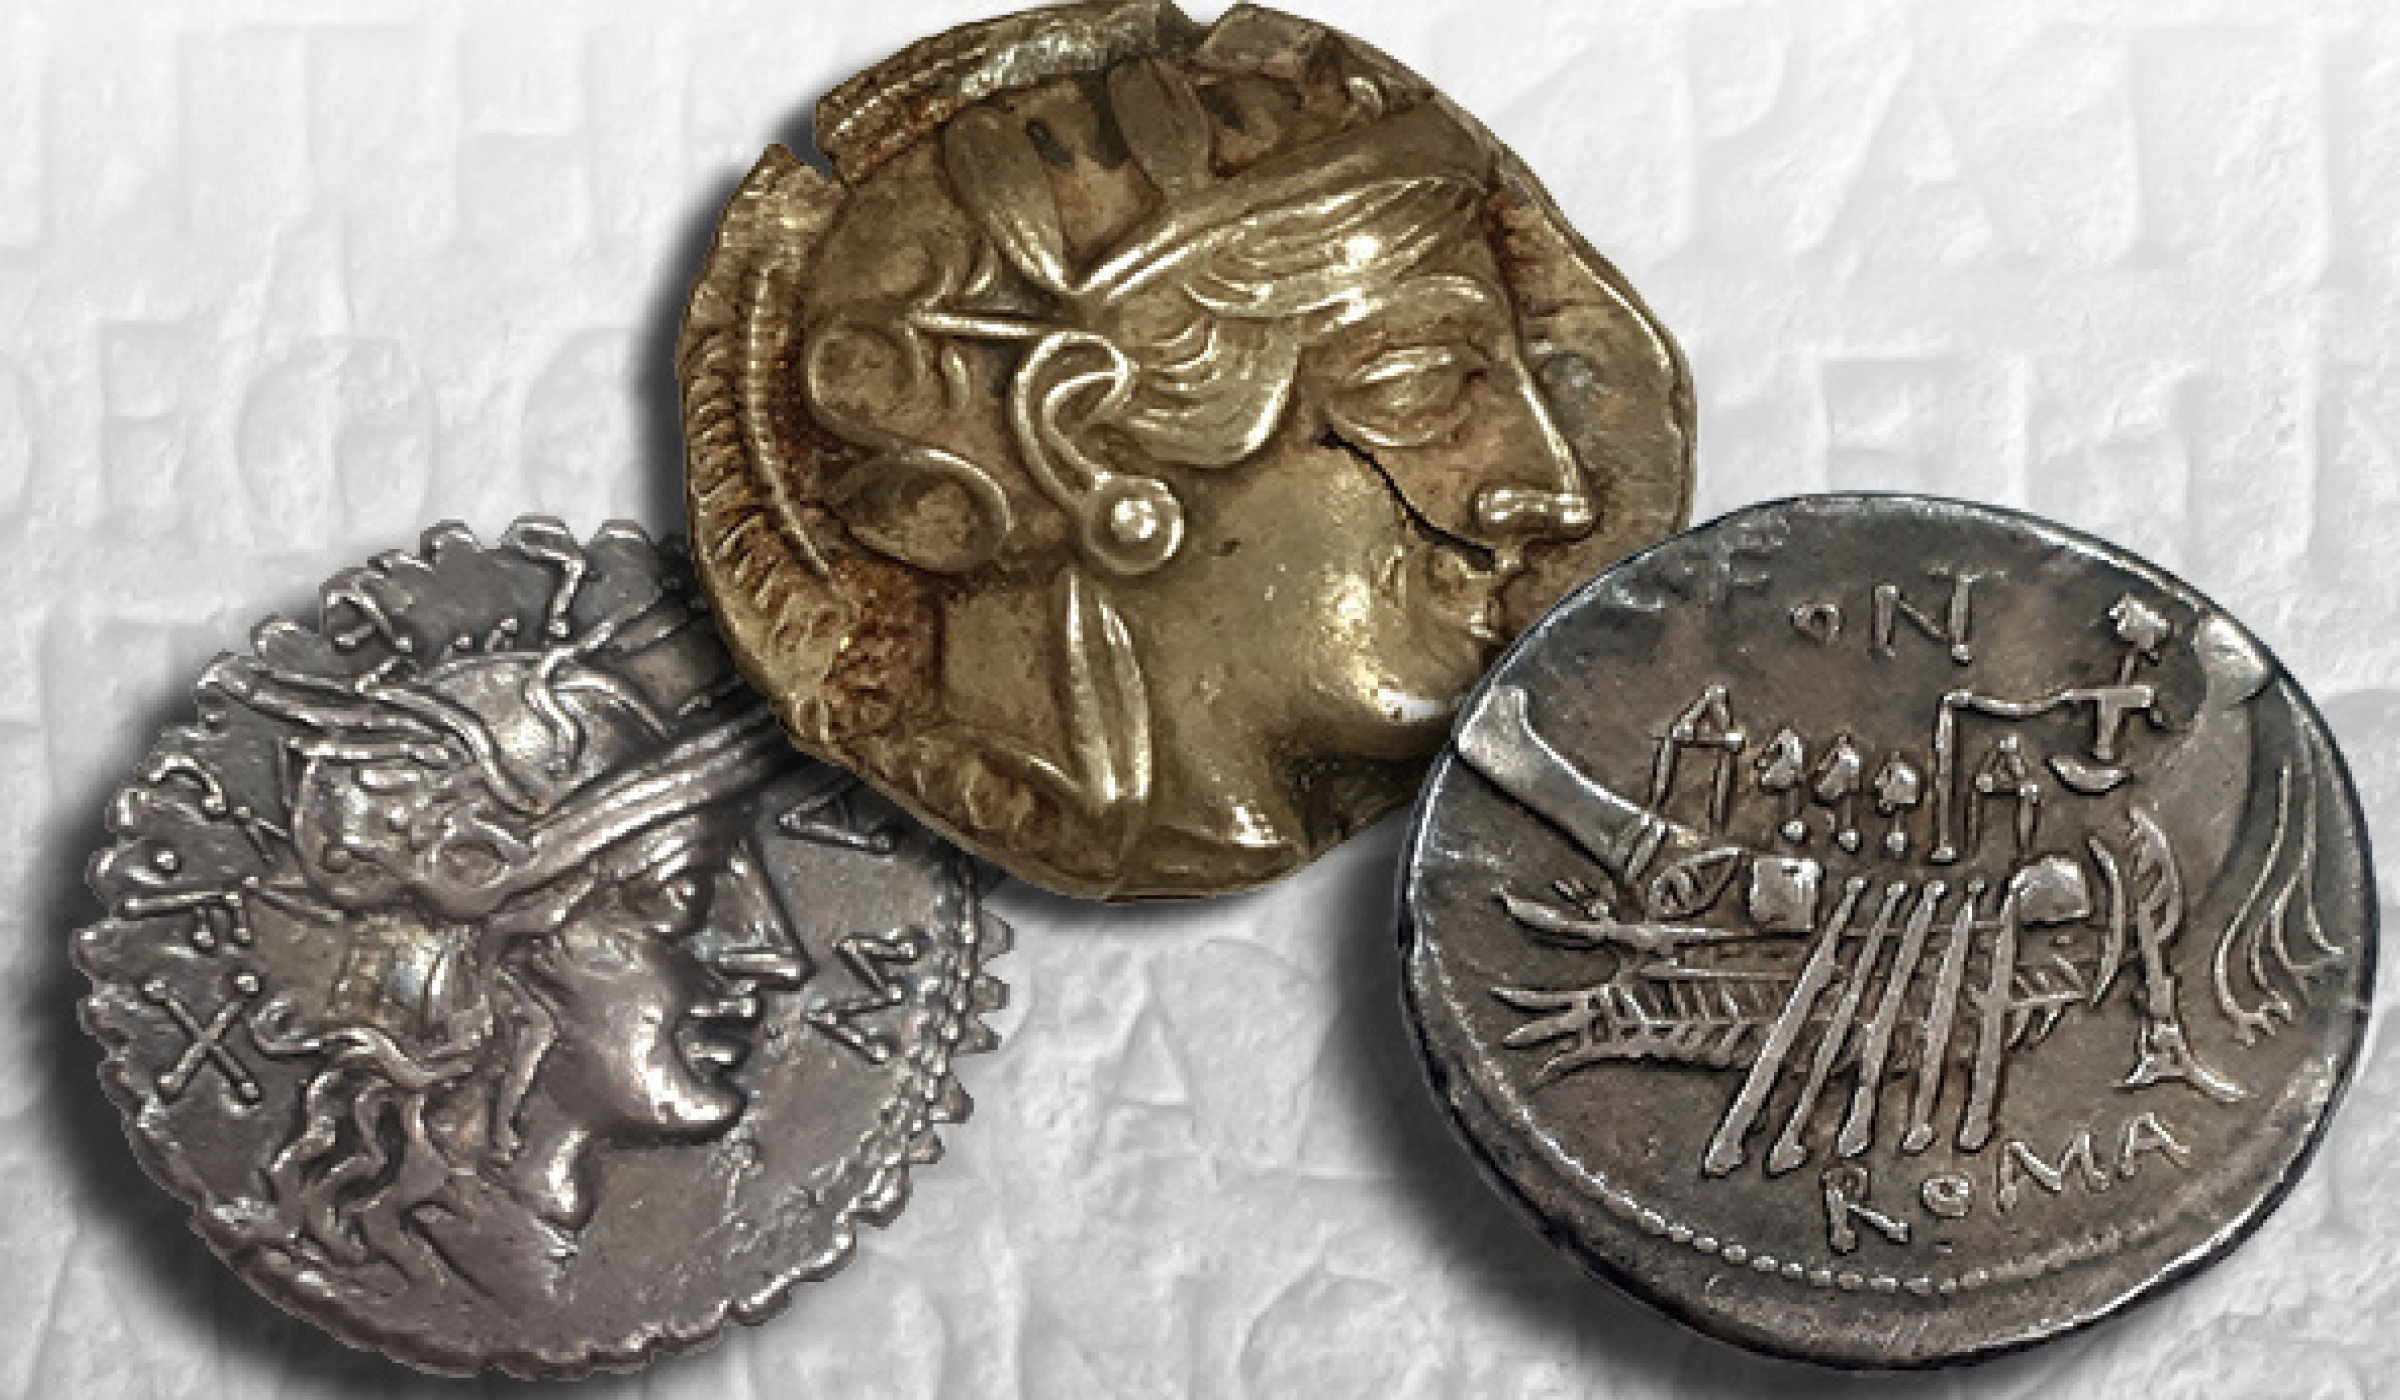 From left: Roman Republic silver Denarius of C. Poblicius Malleolus, 118 BCE, Purchase, 1946; Athenian silver tetradrachm, after 449 BCE. Gift of B.R. Brace, 1995; Roman Republic silver Denarius of C. Fonteius, 114 BCE. Gift of Dr. A.G. McKay, 2004